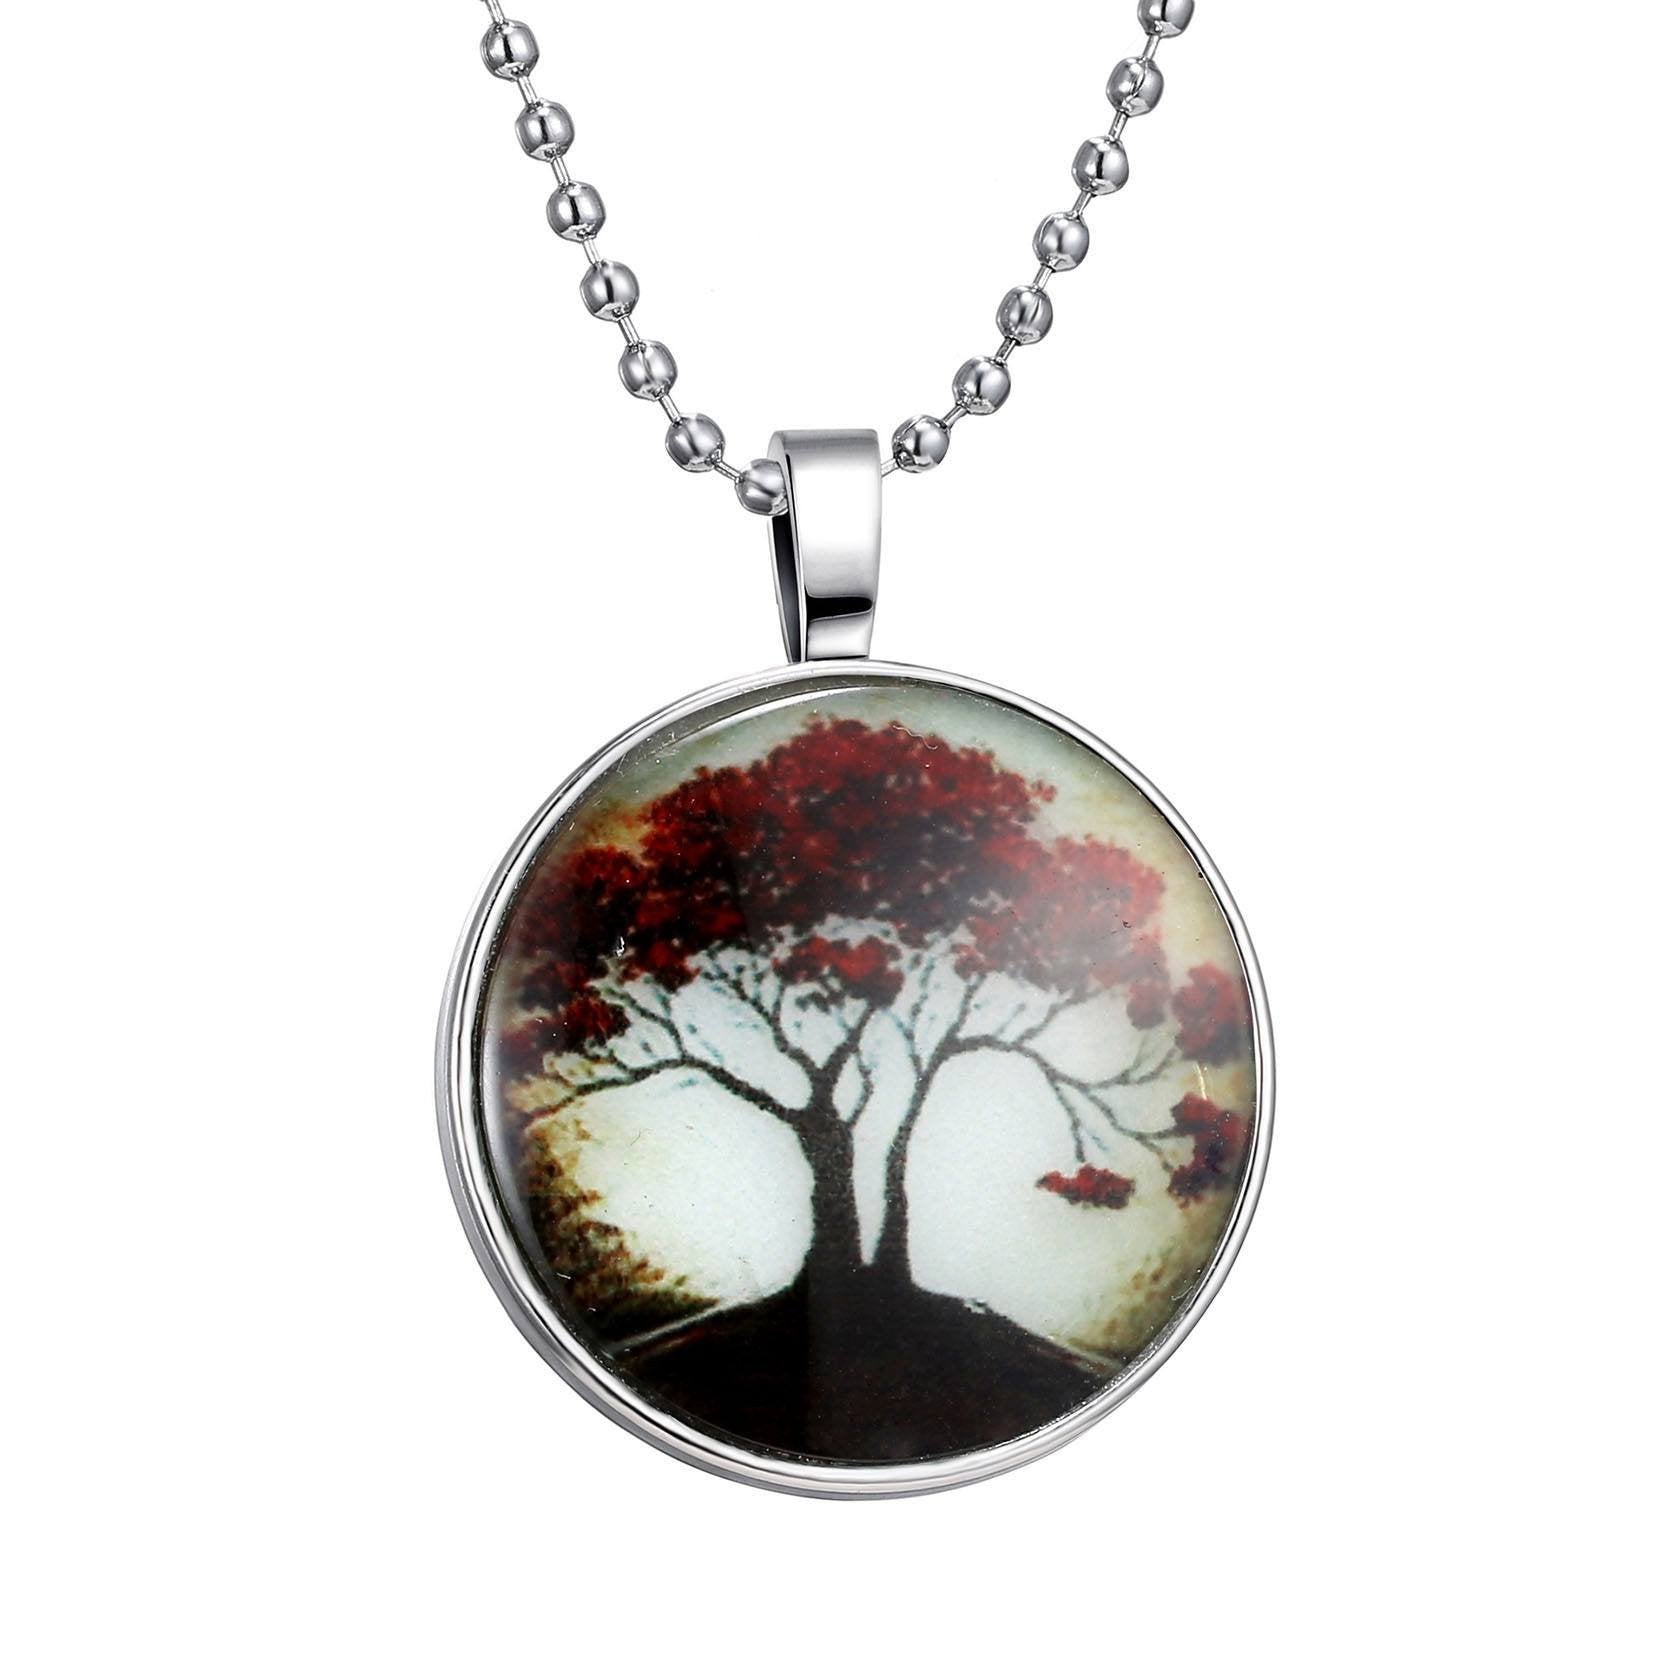 Pendant Necklaces - Glow In The Dark Tree Of Life Pendant